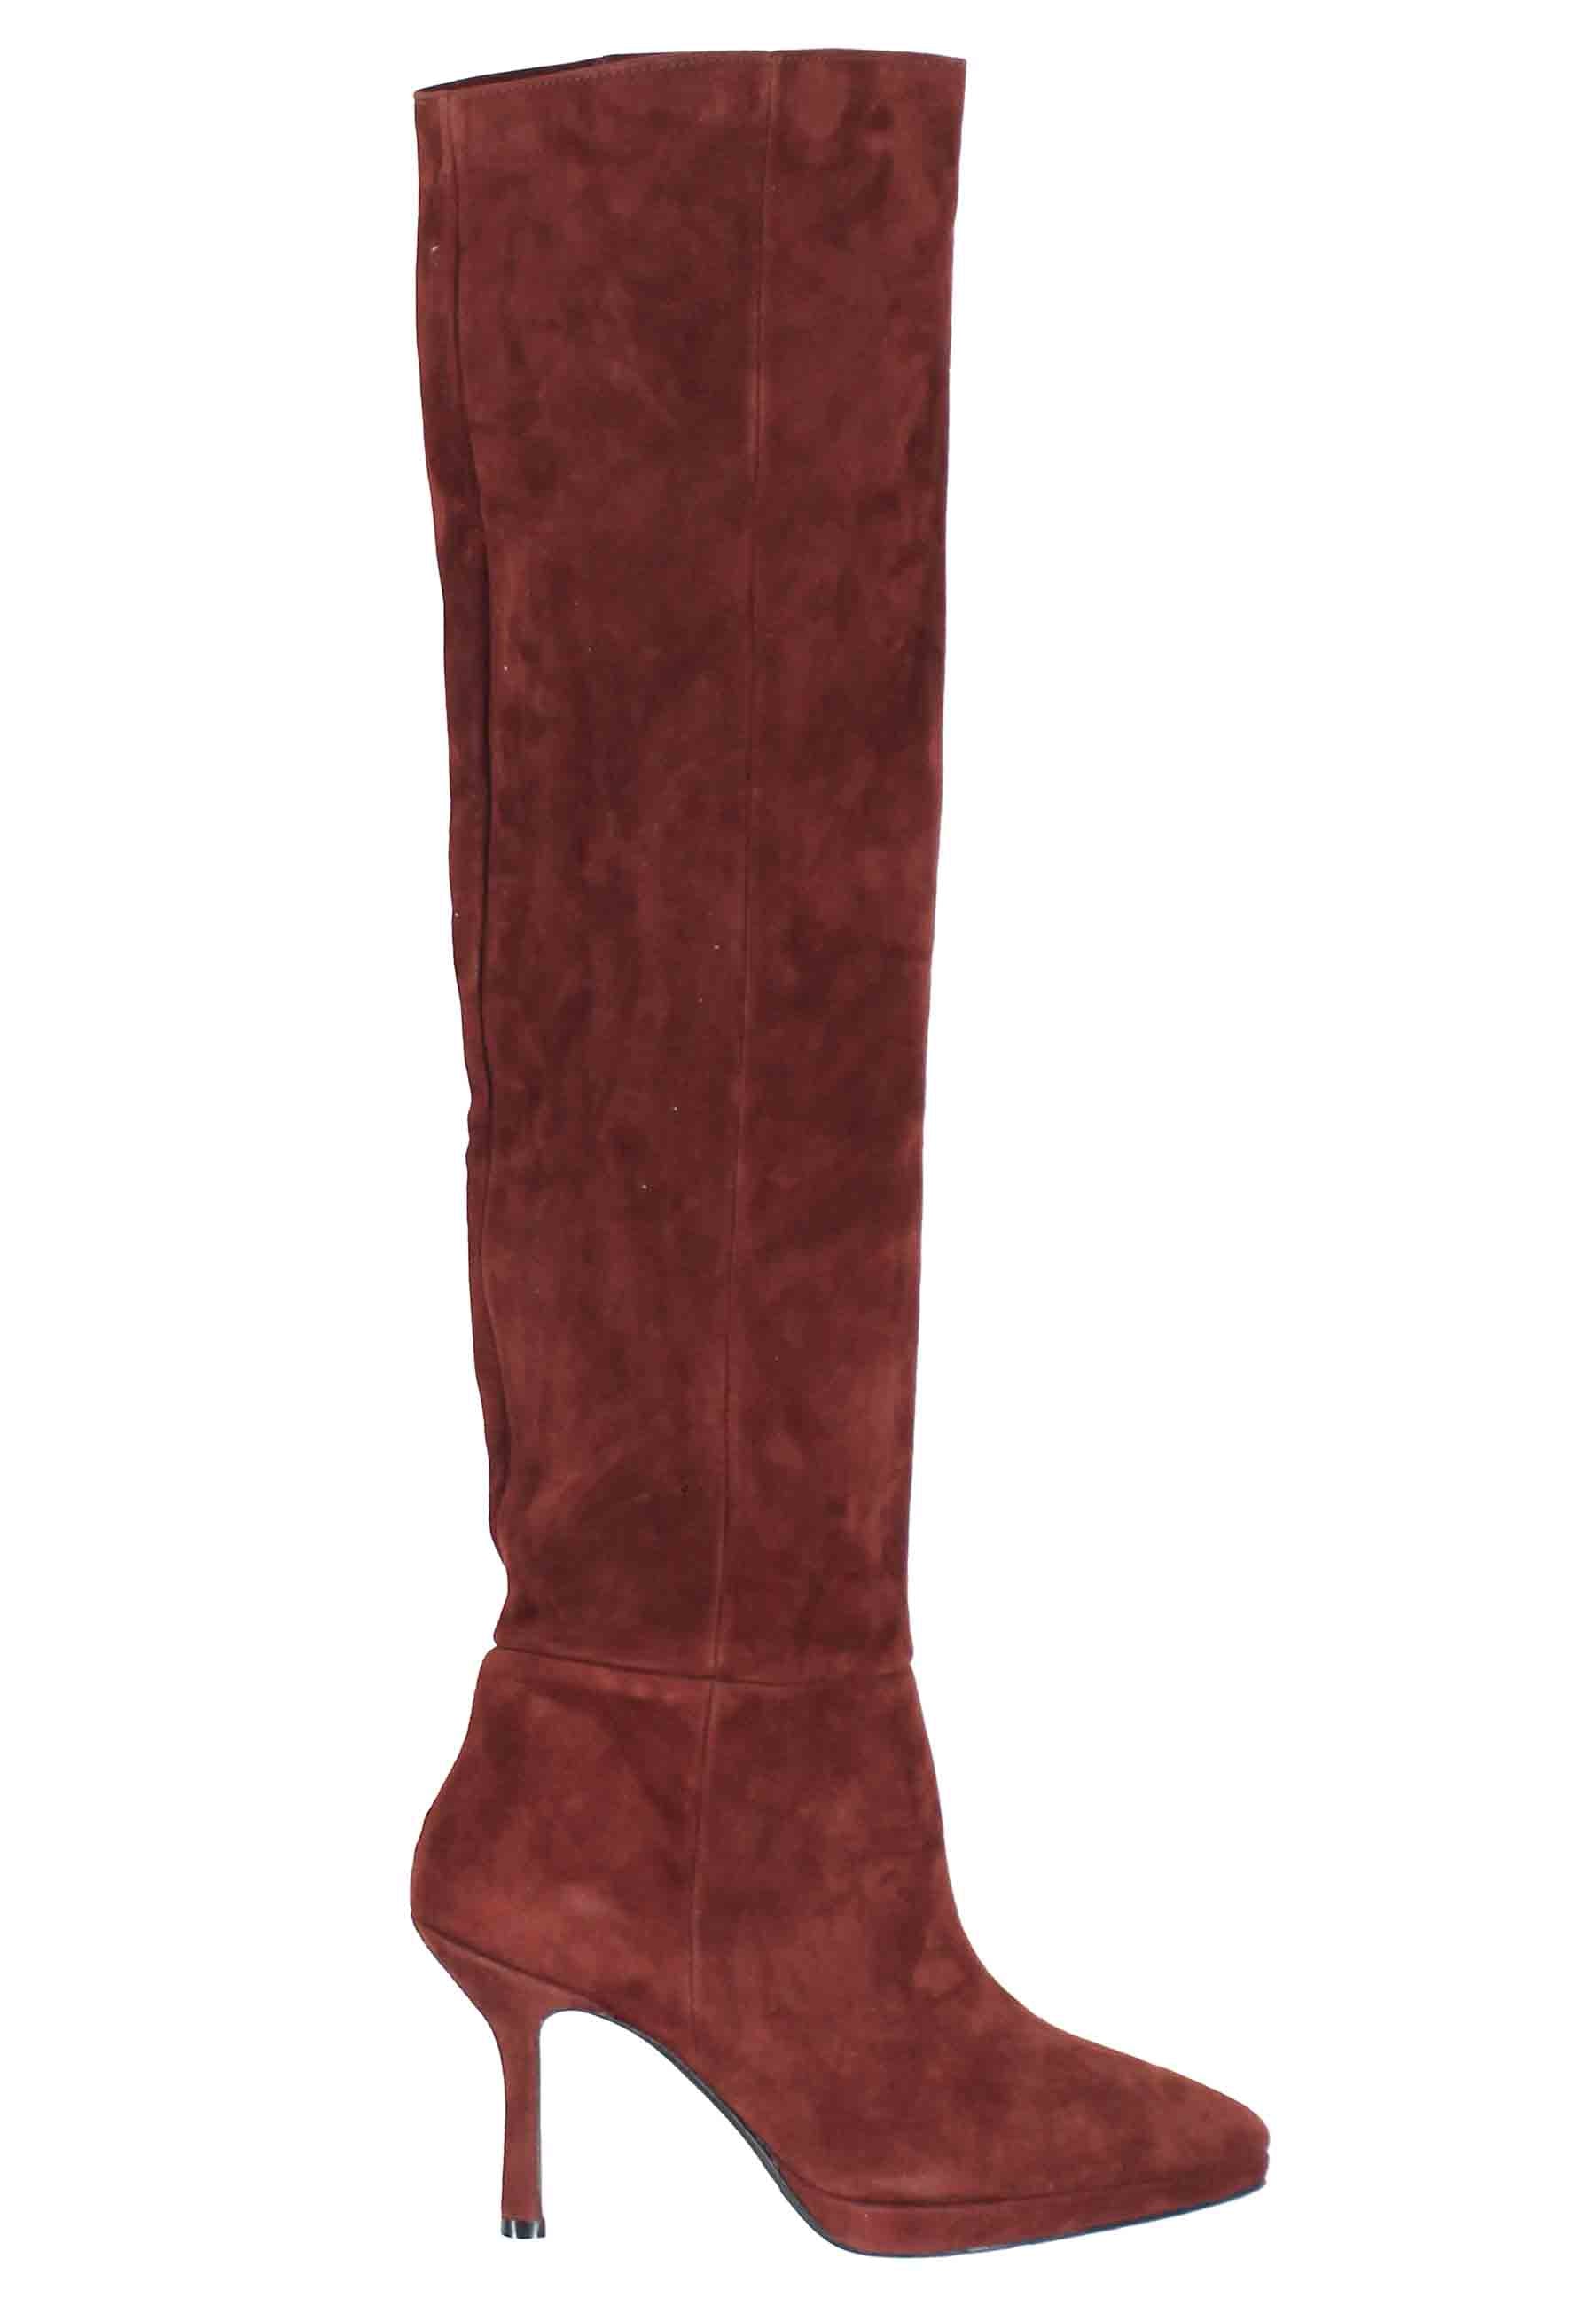 Women's brown suede boots with heel and platform